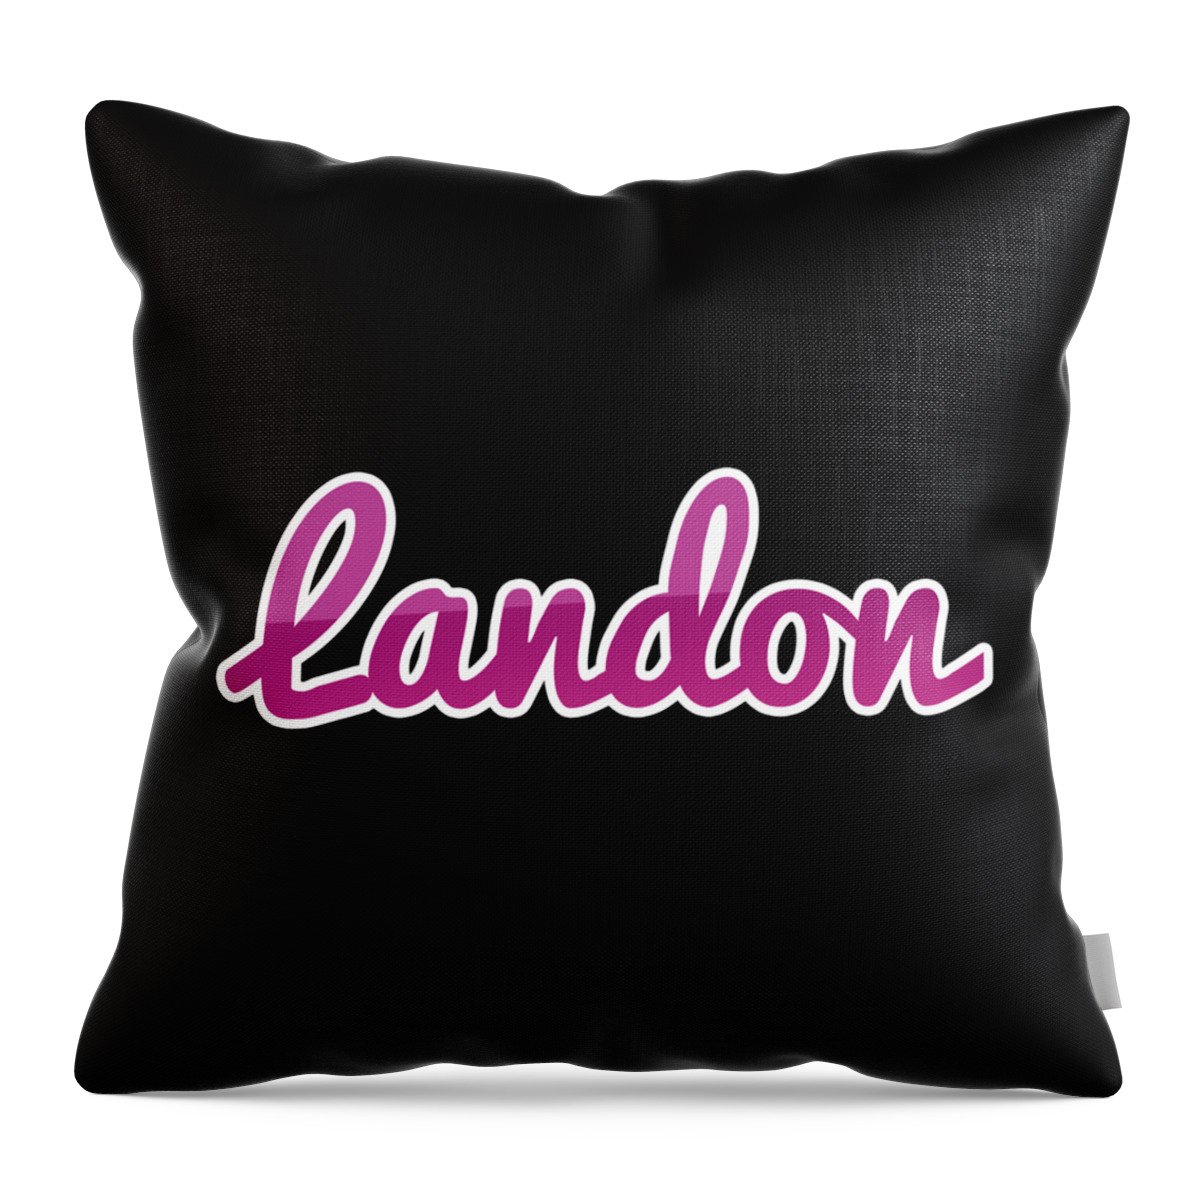 Landon Throw Pillow featuring the digital art Landon #Landon by TintoDesigns